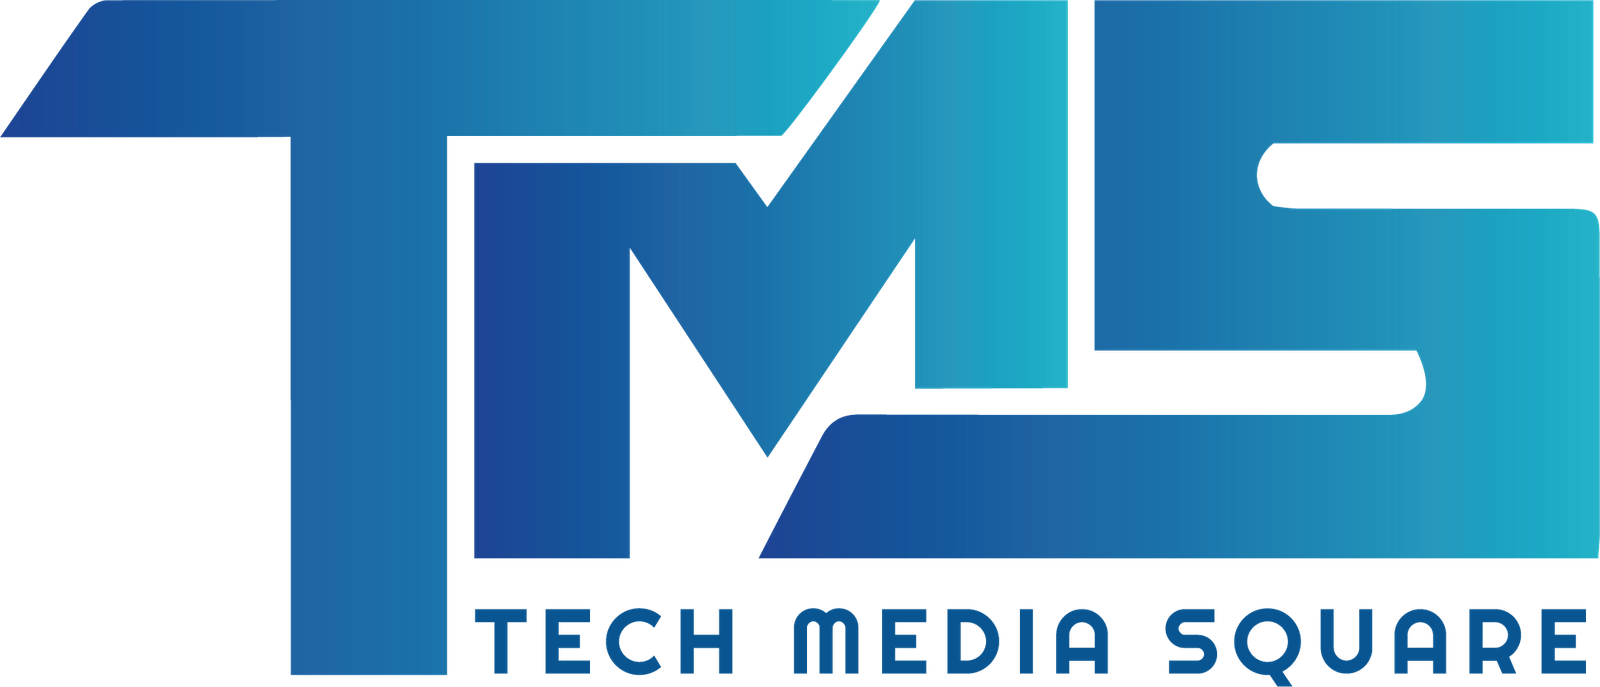 TechMediaSquare